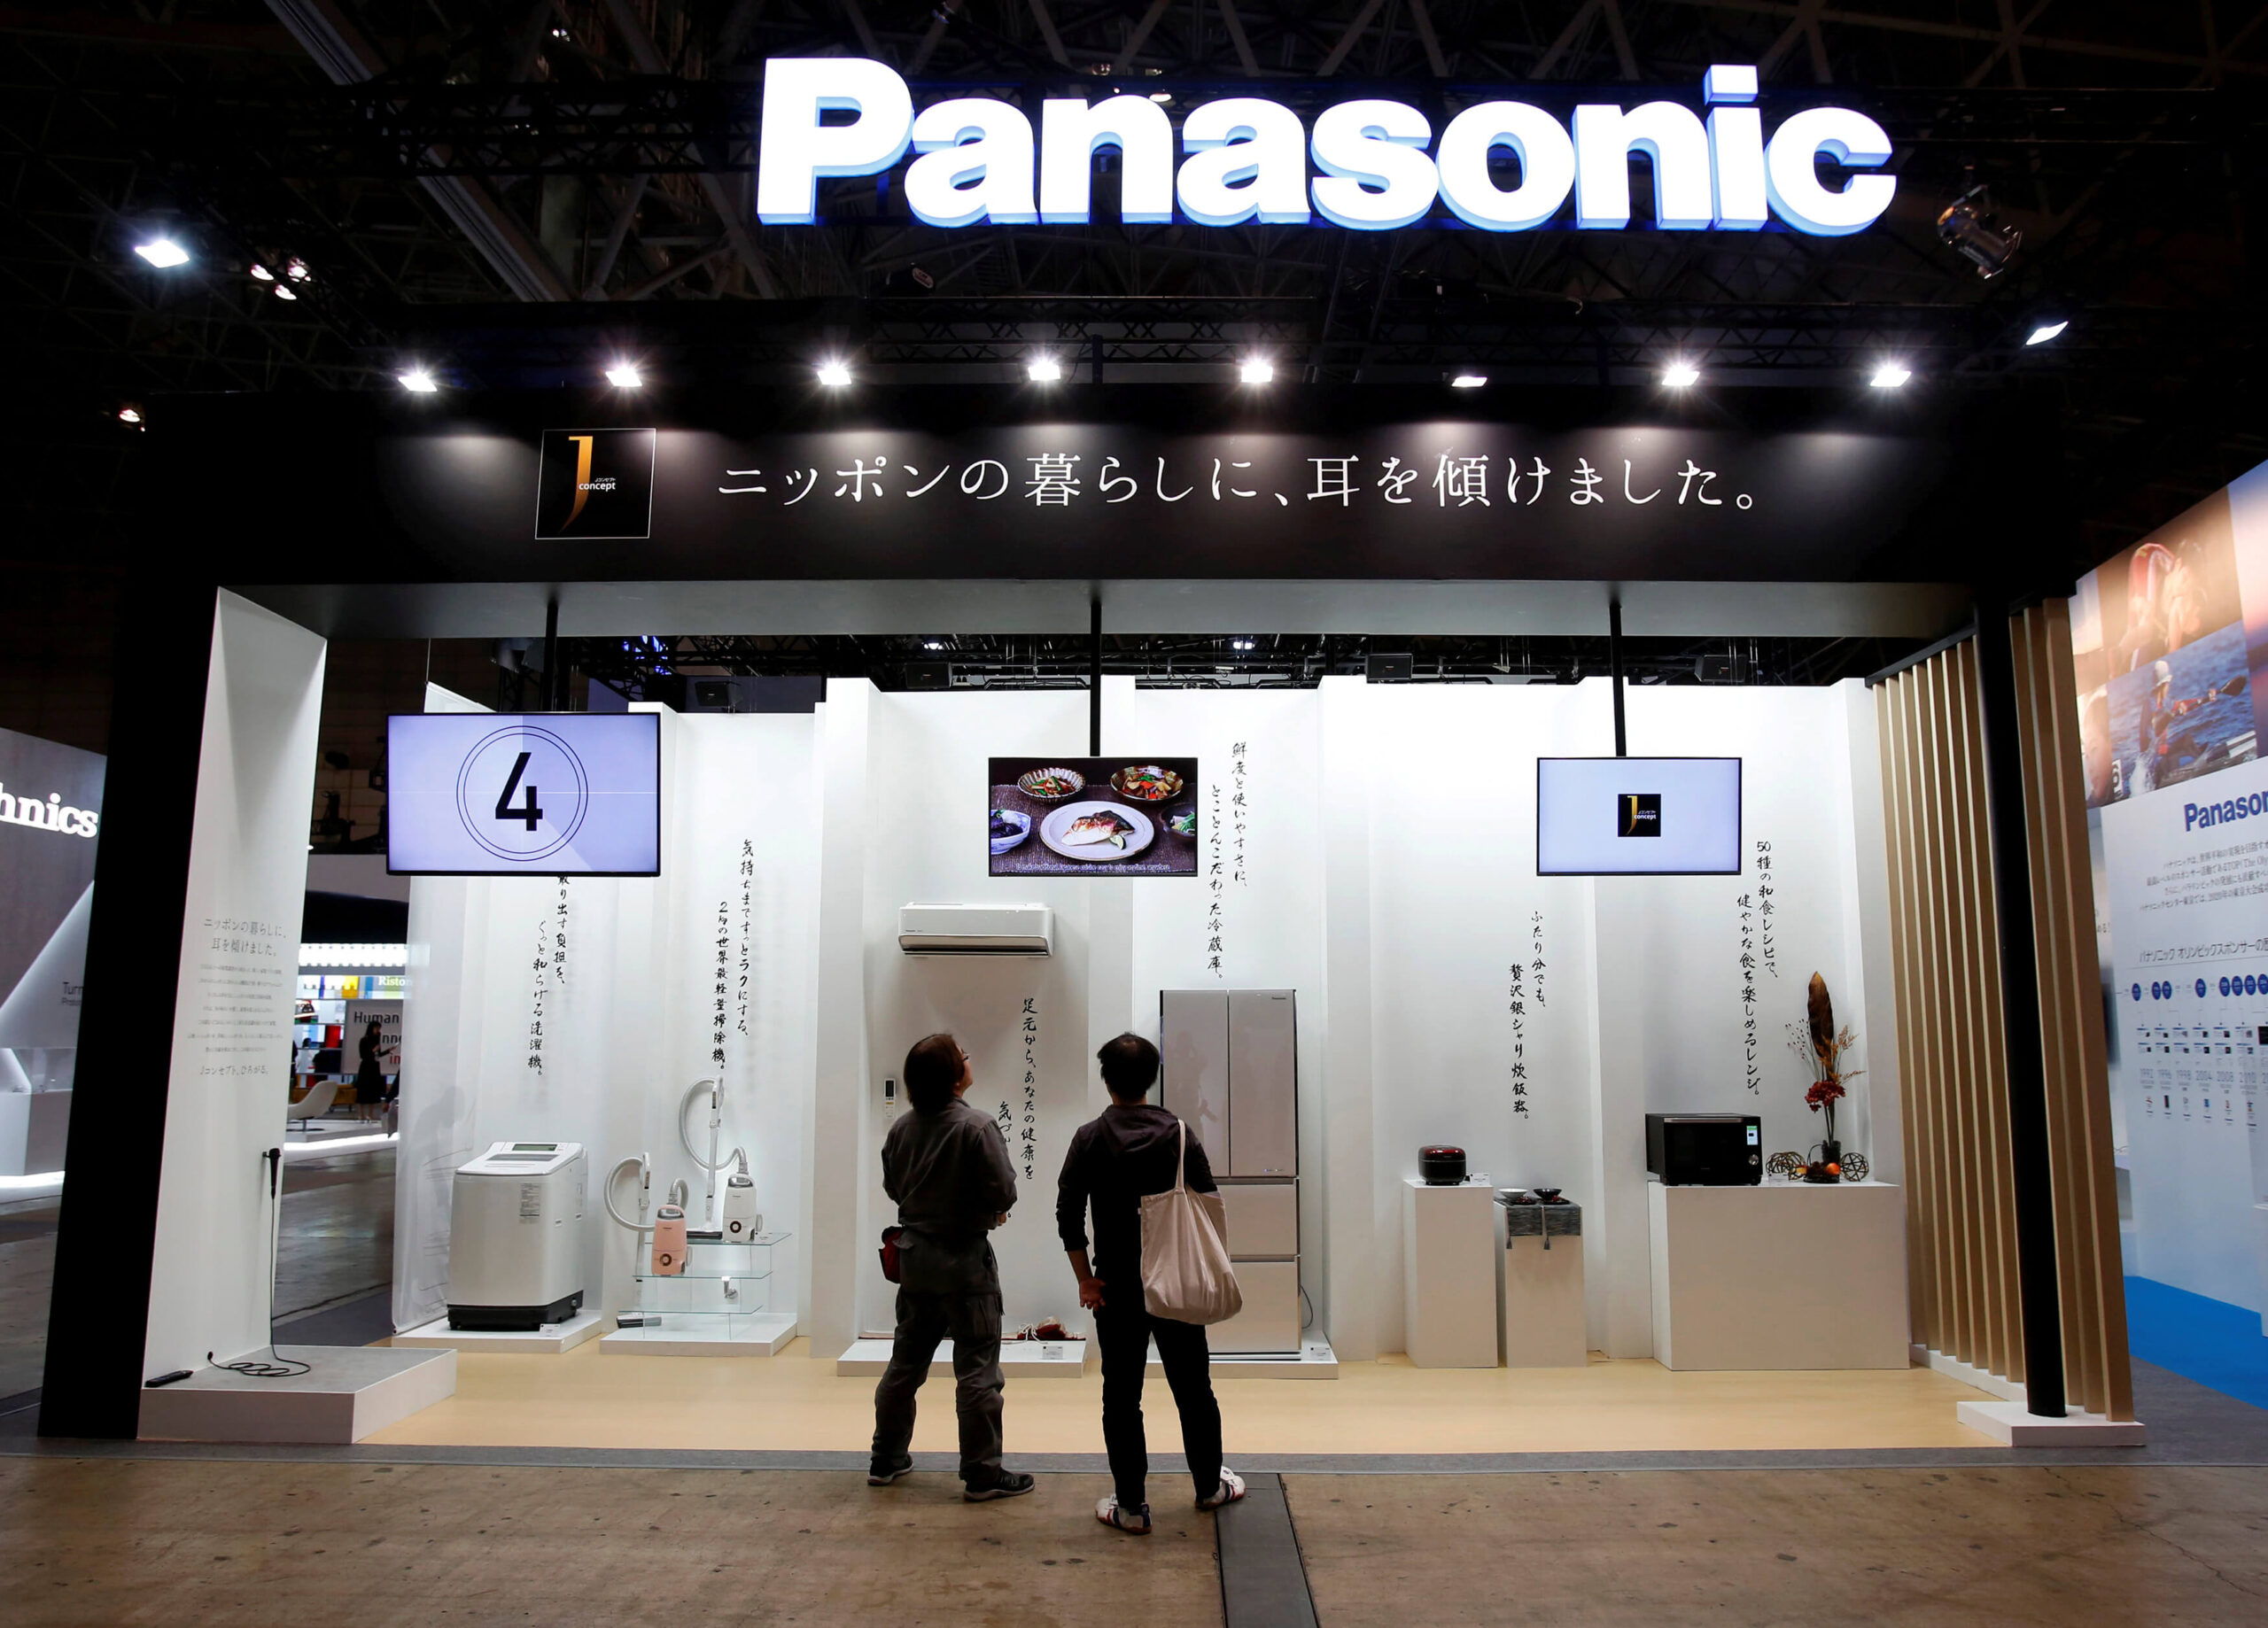 Panasonic Q1 profit jumps, maintains FY forecast